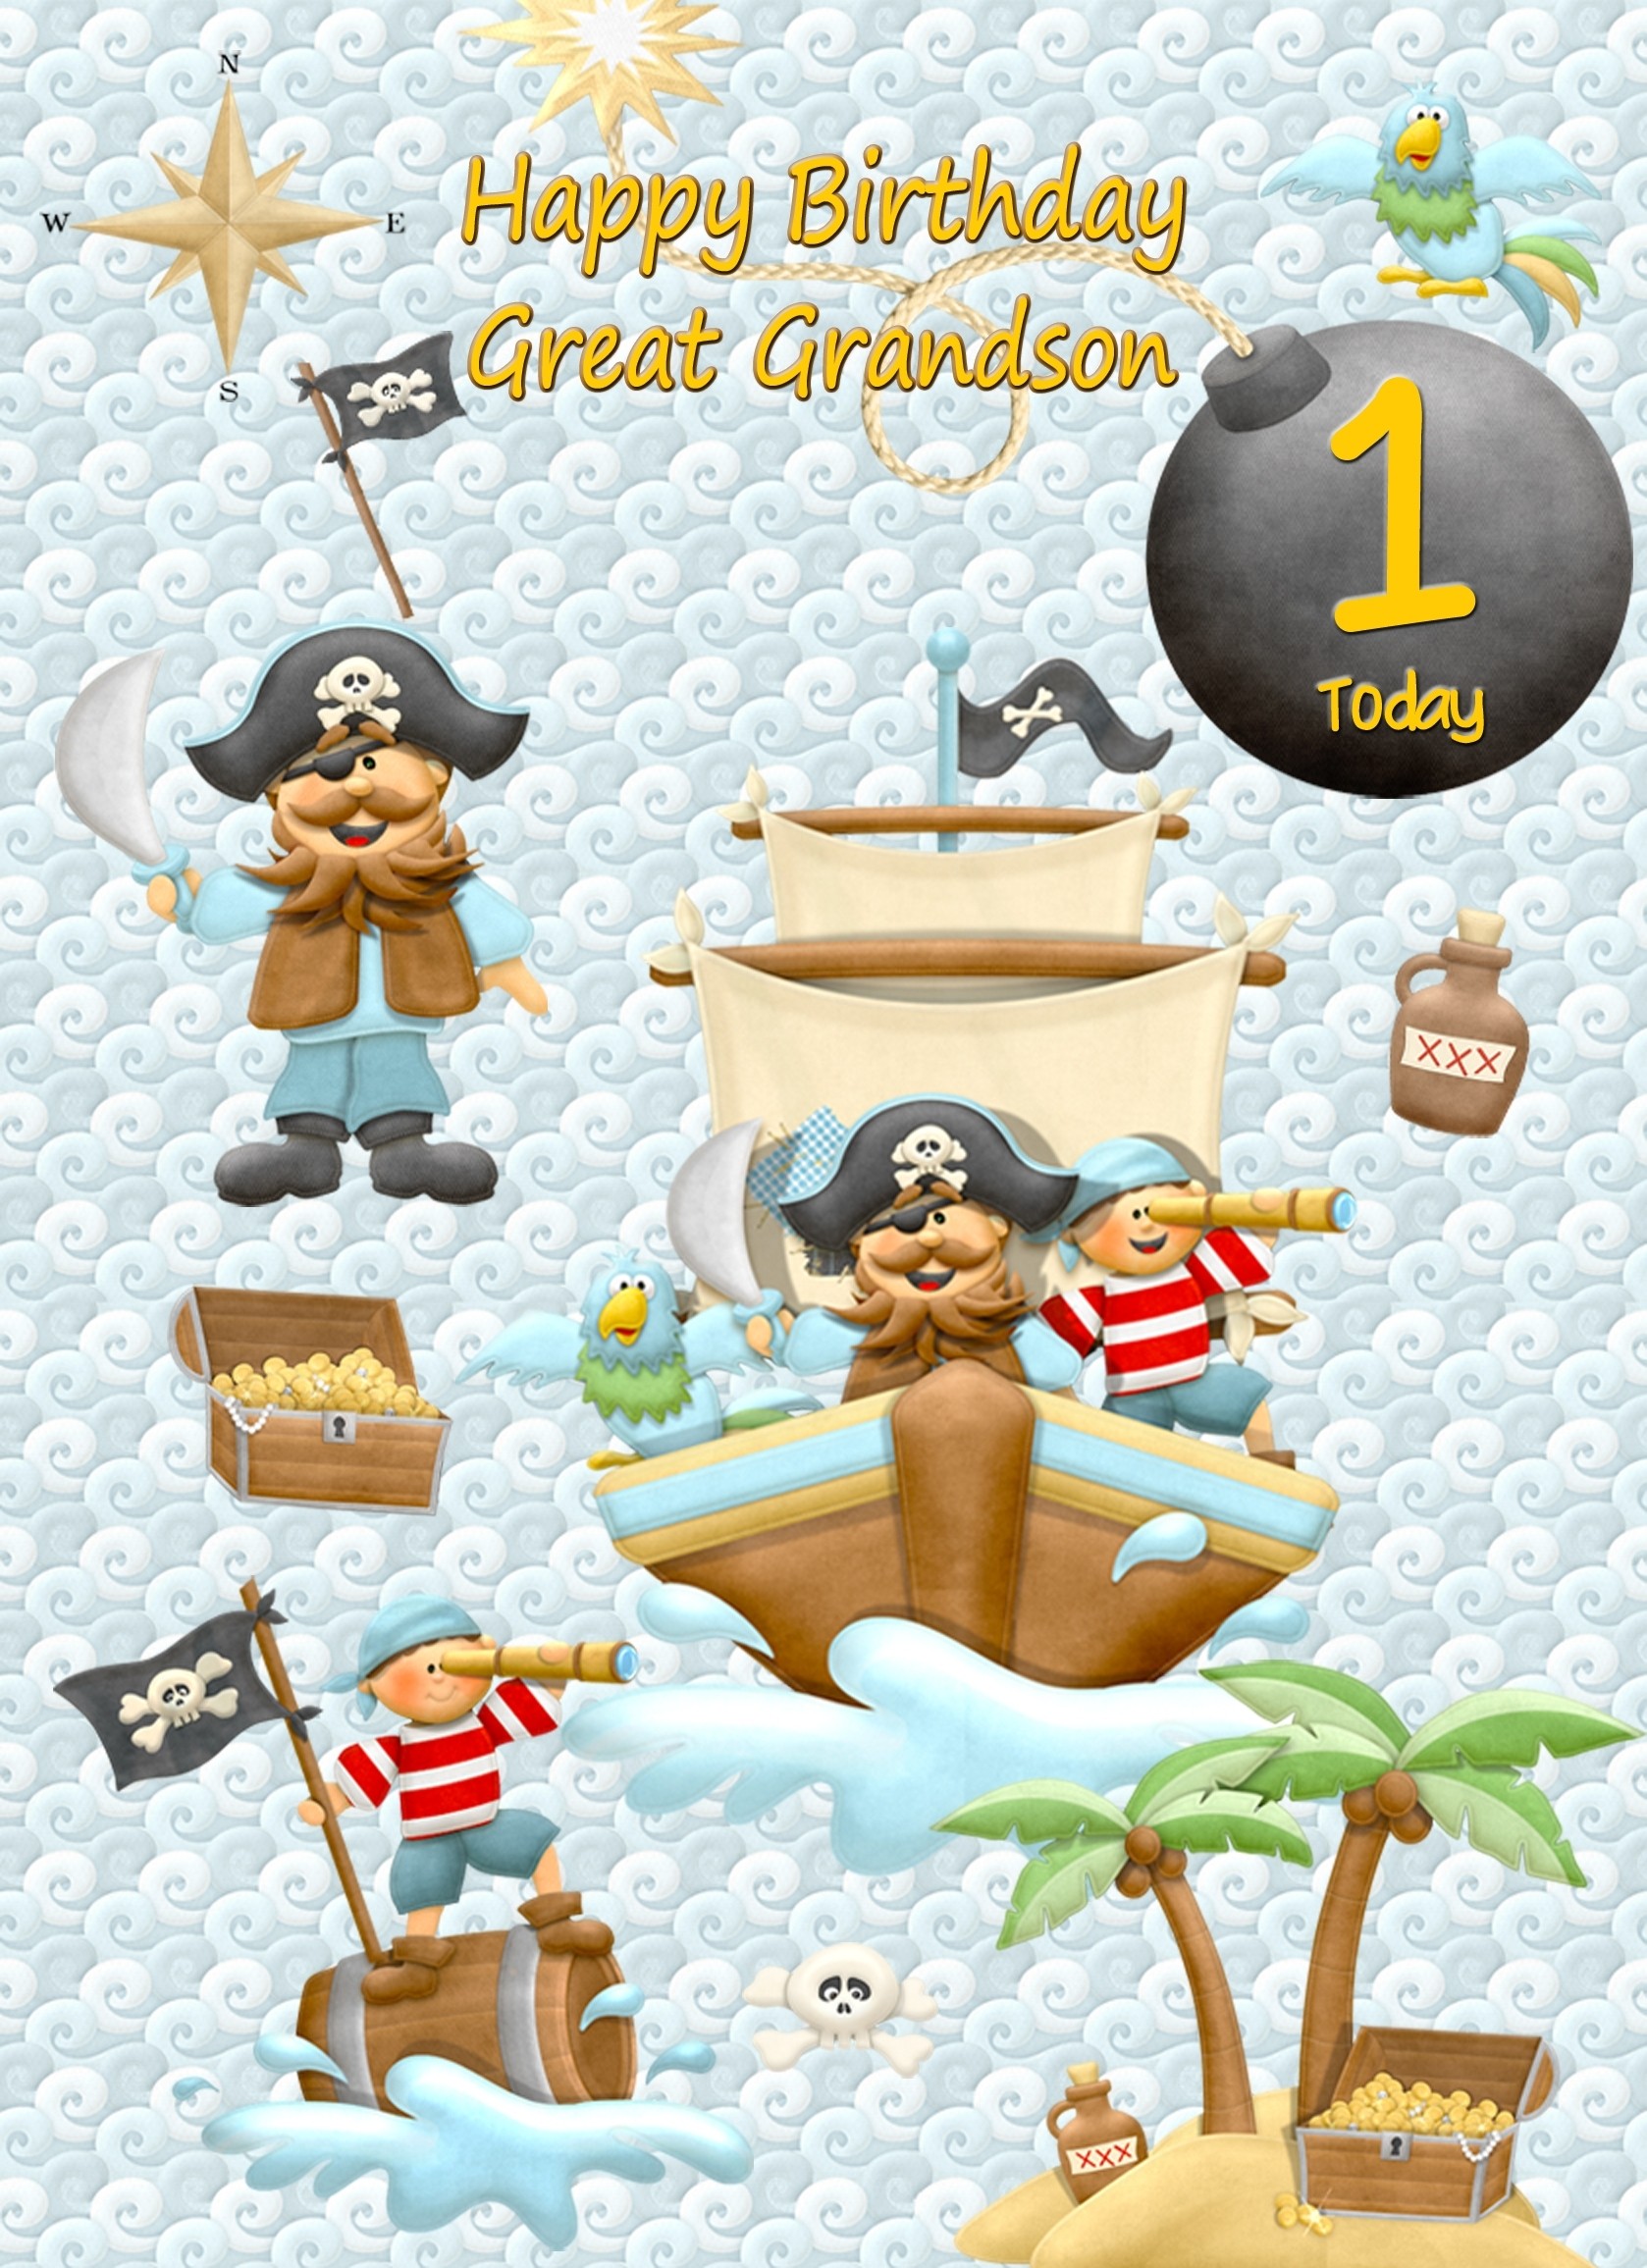 Kids 1st Birthday Pirate Cartoon Card for Great Grandson